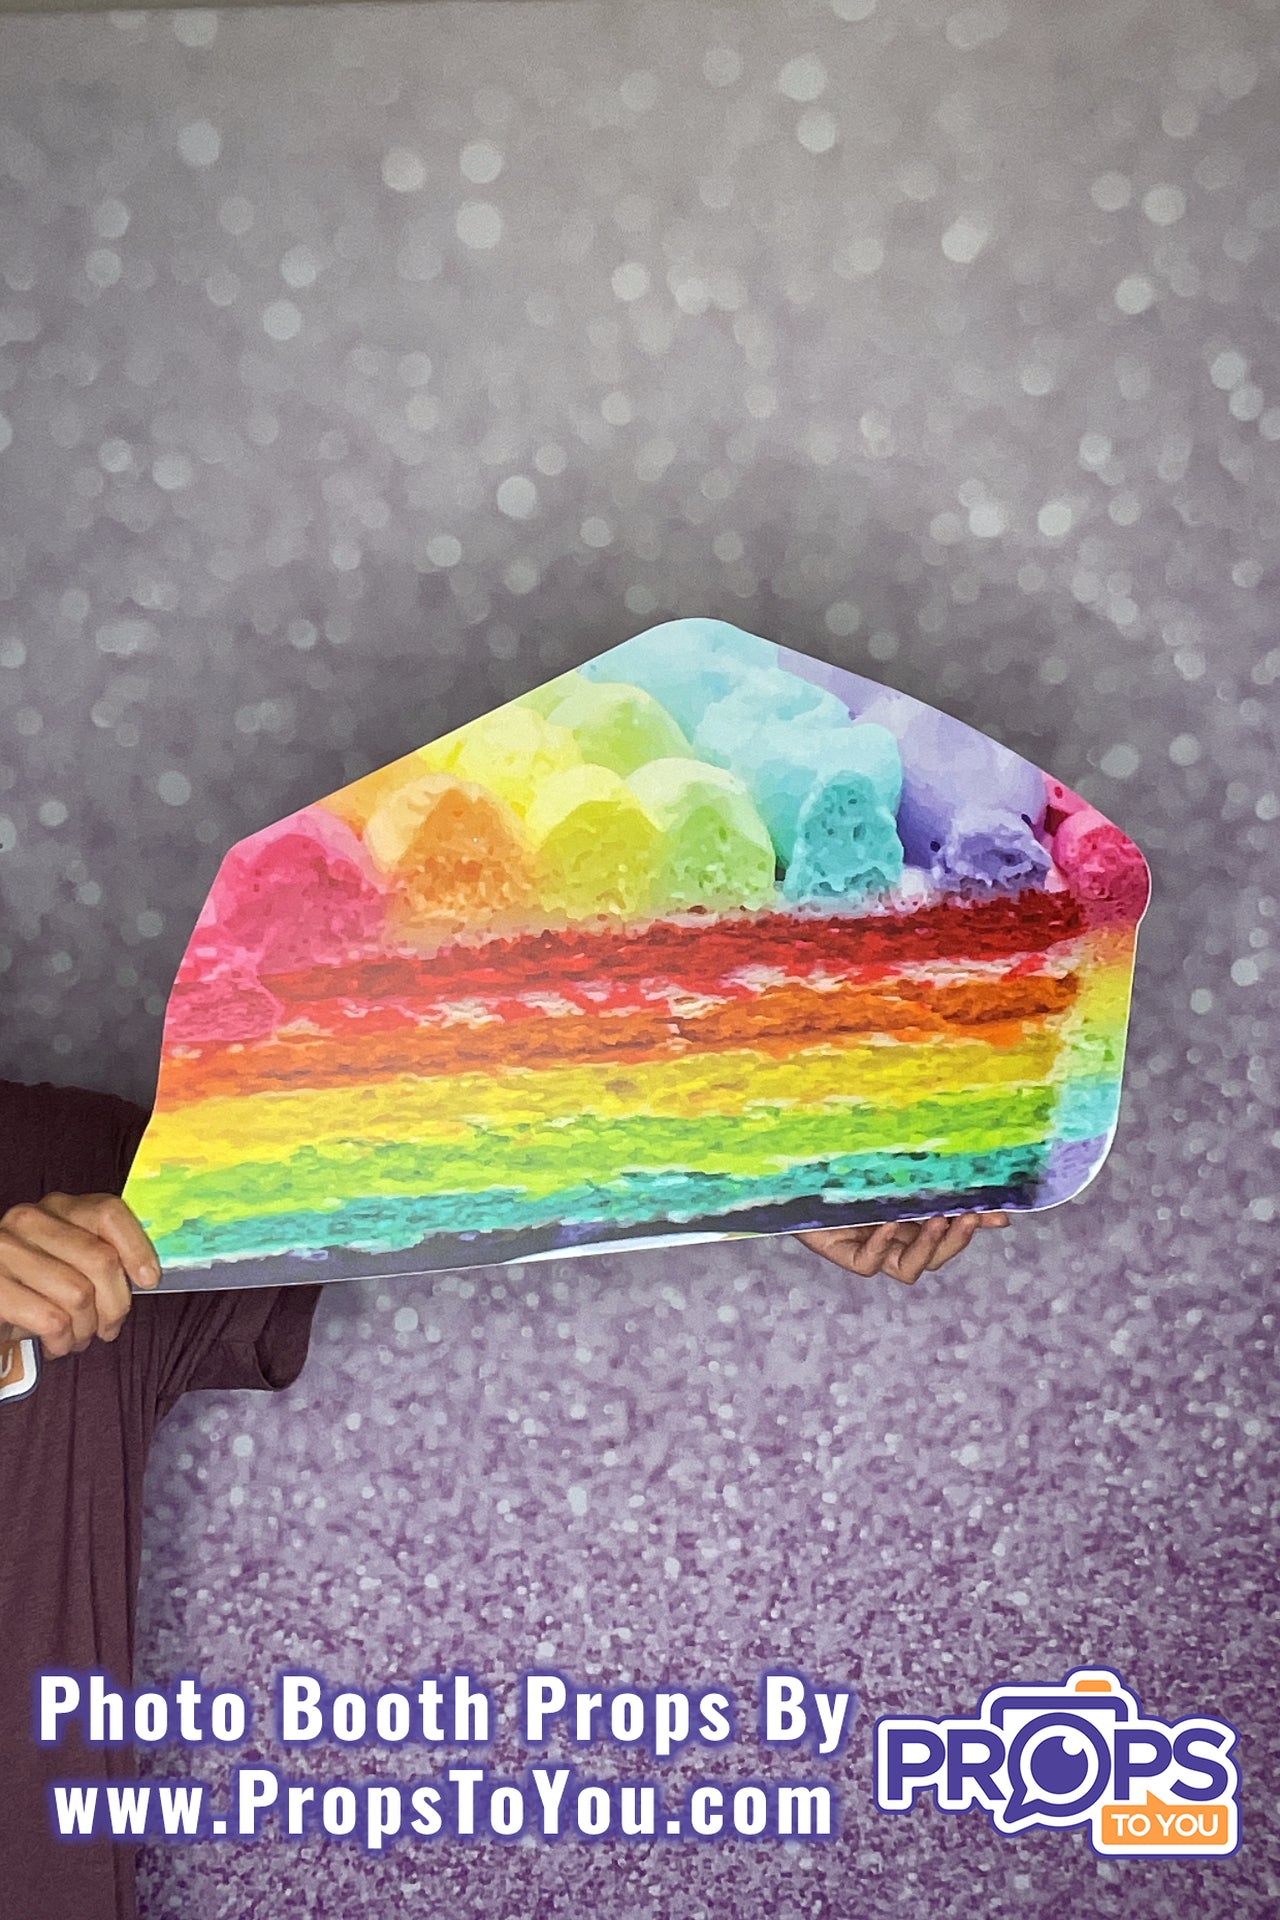 BIG Props: Chocolate/Rainbow Cake Slice Photo Booth Prop